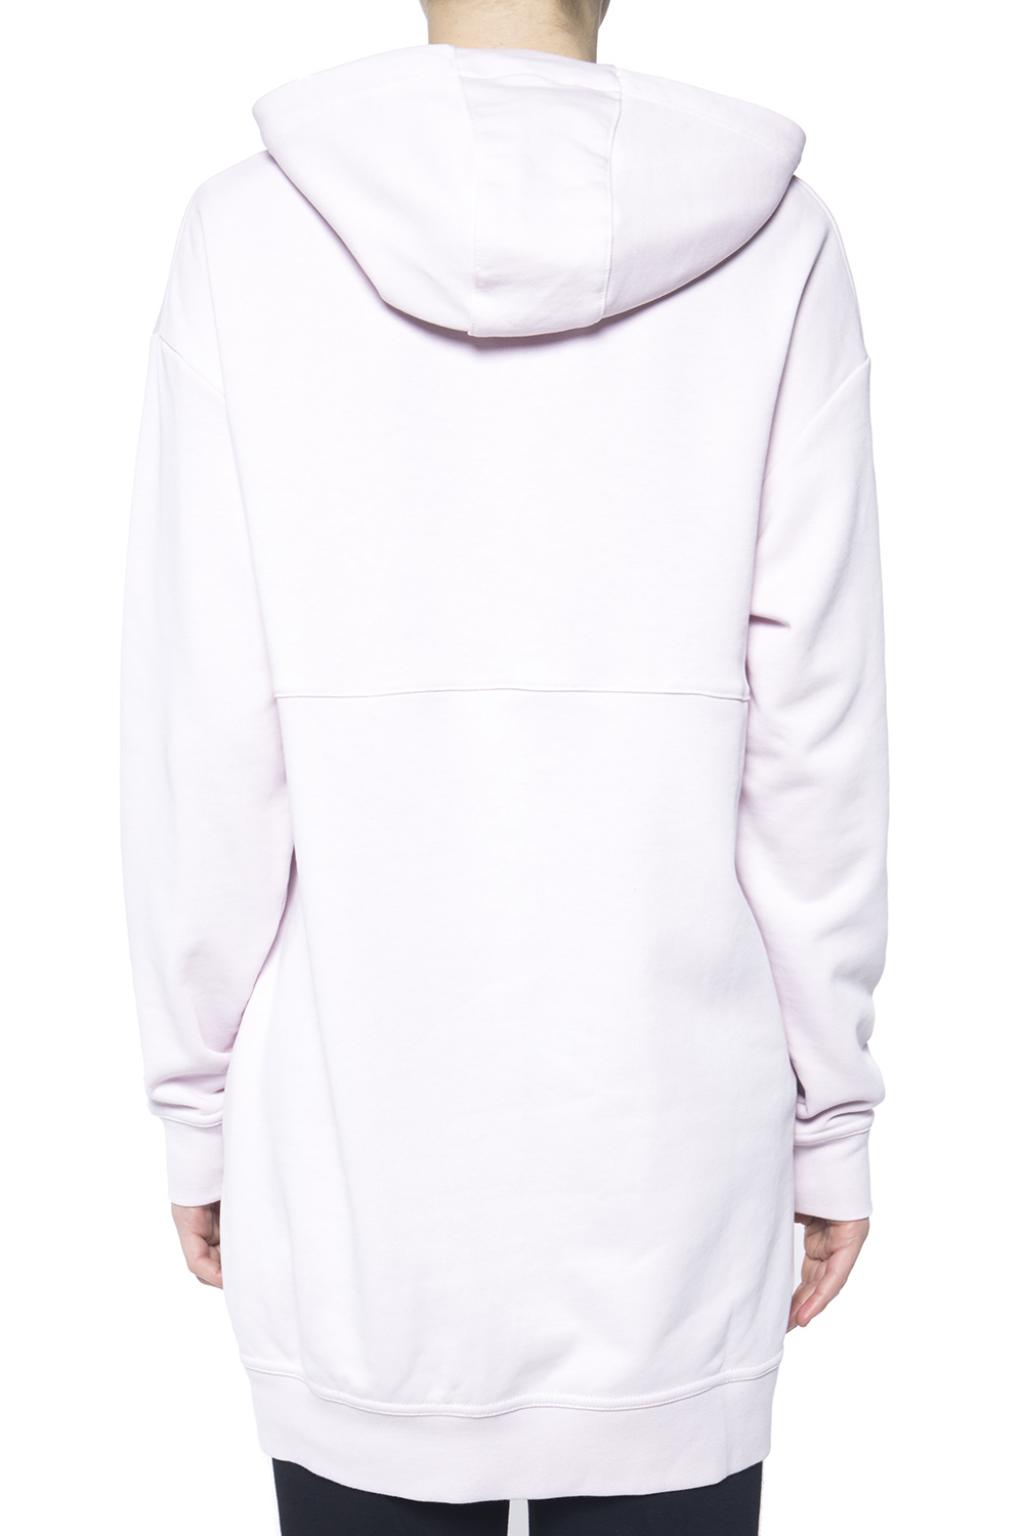 Hooded sweatshirt dress Nike - Vitkac HK